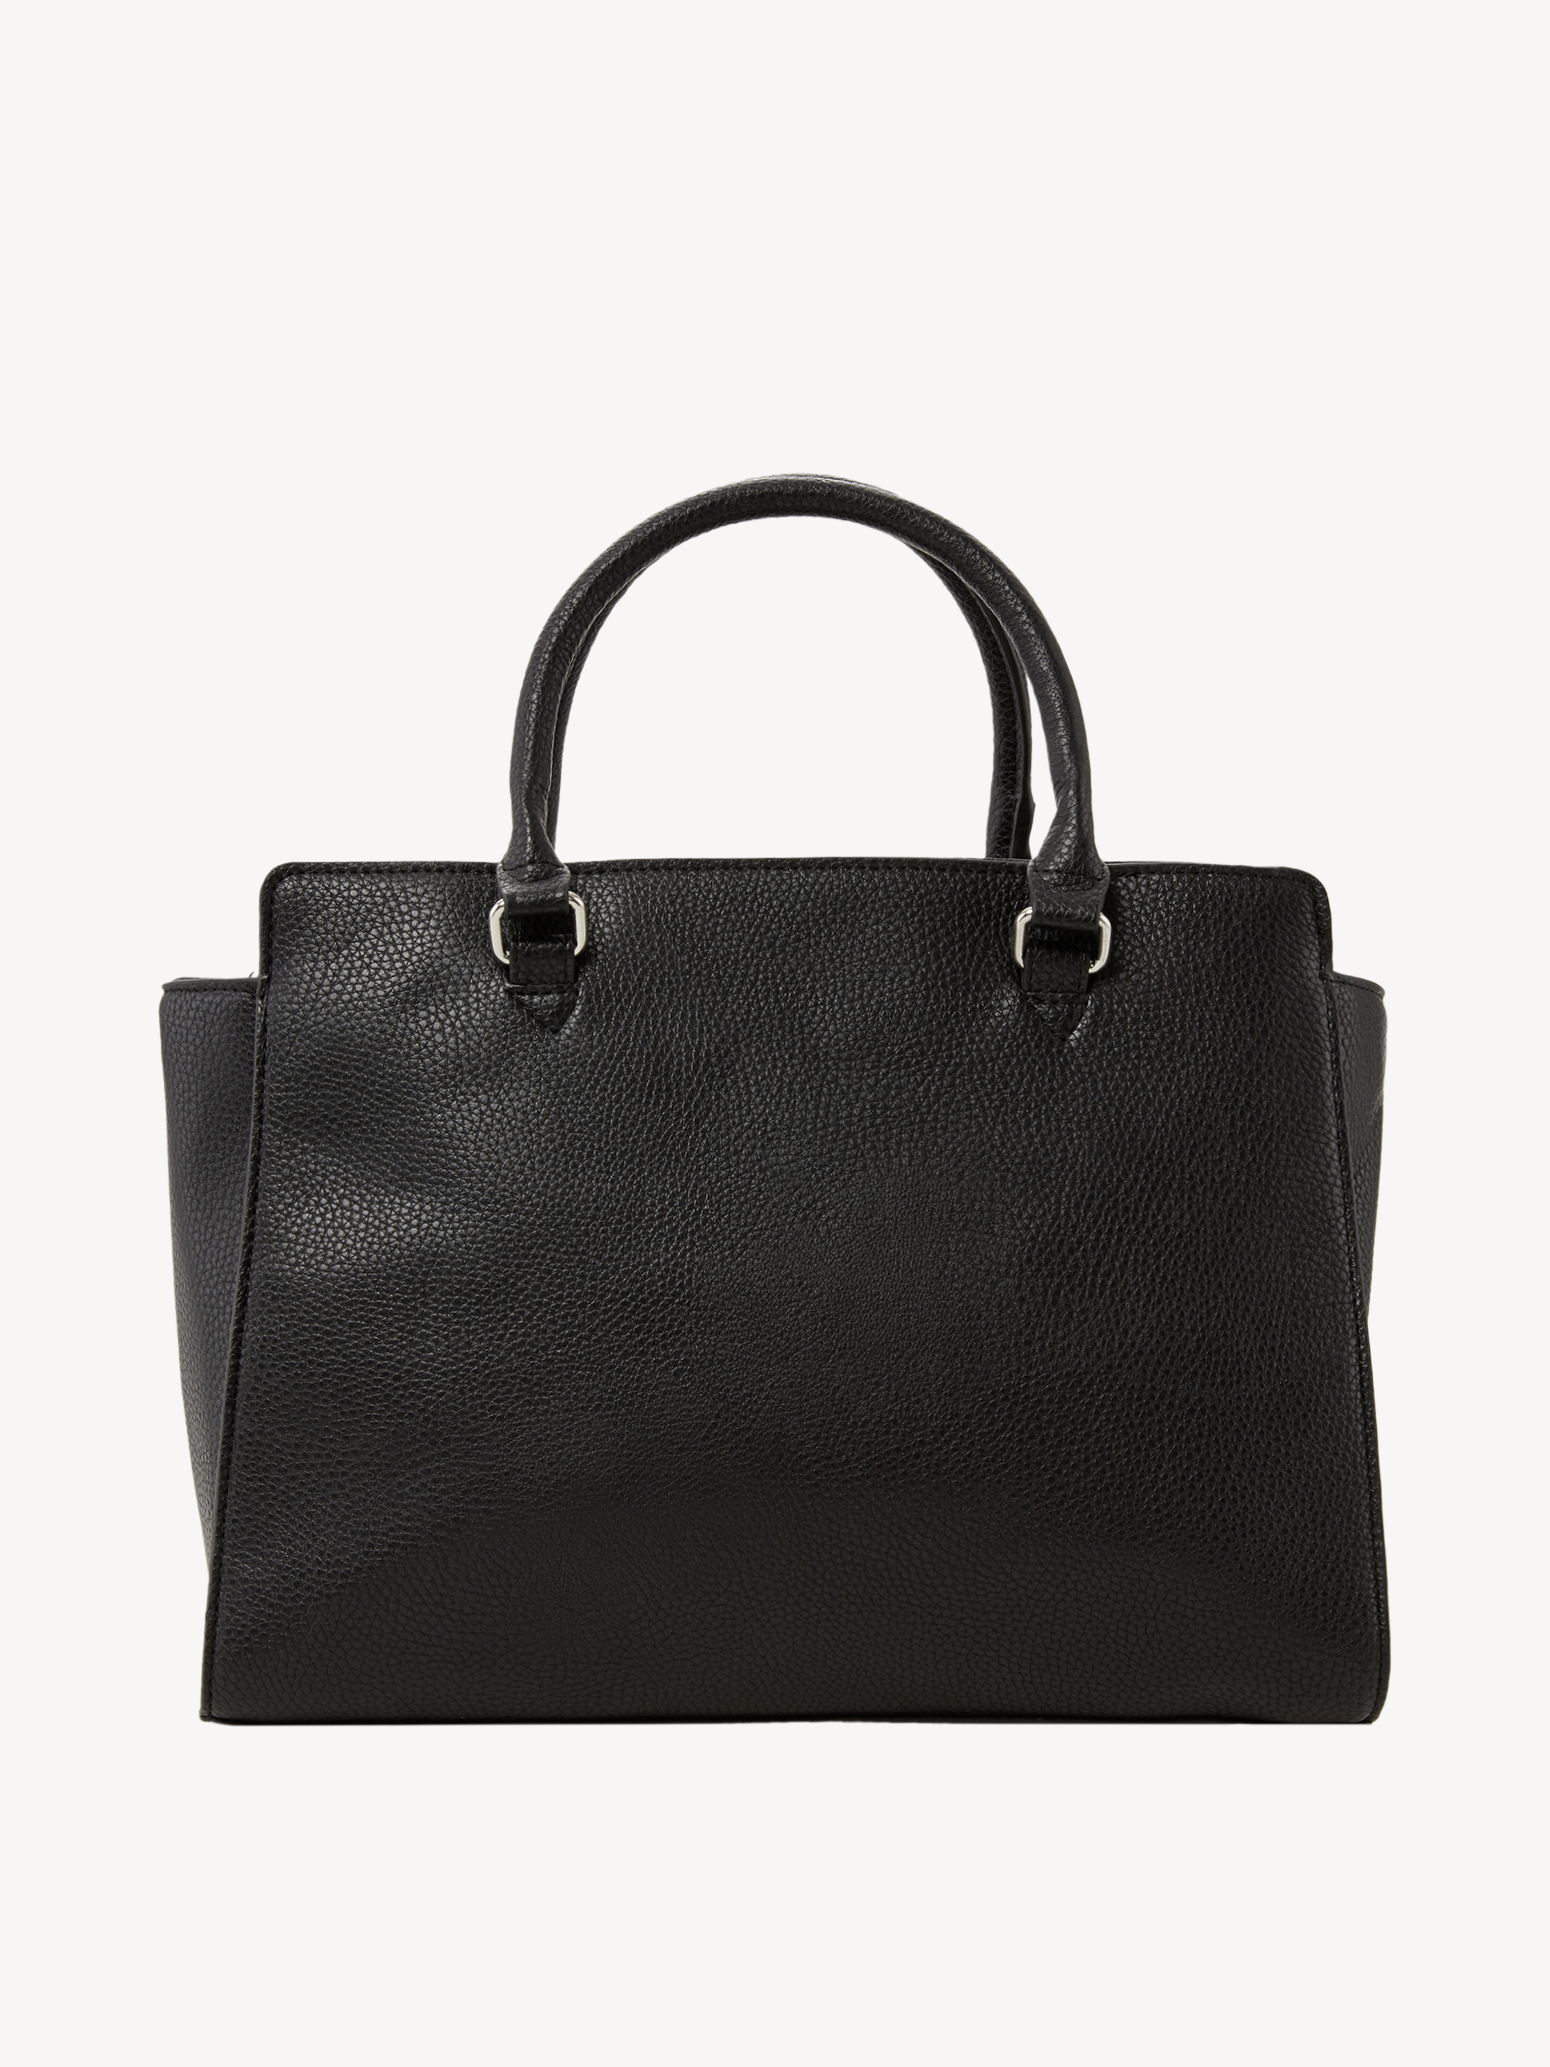 Shopping bag - black, BLACK, hi-res